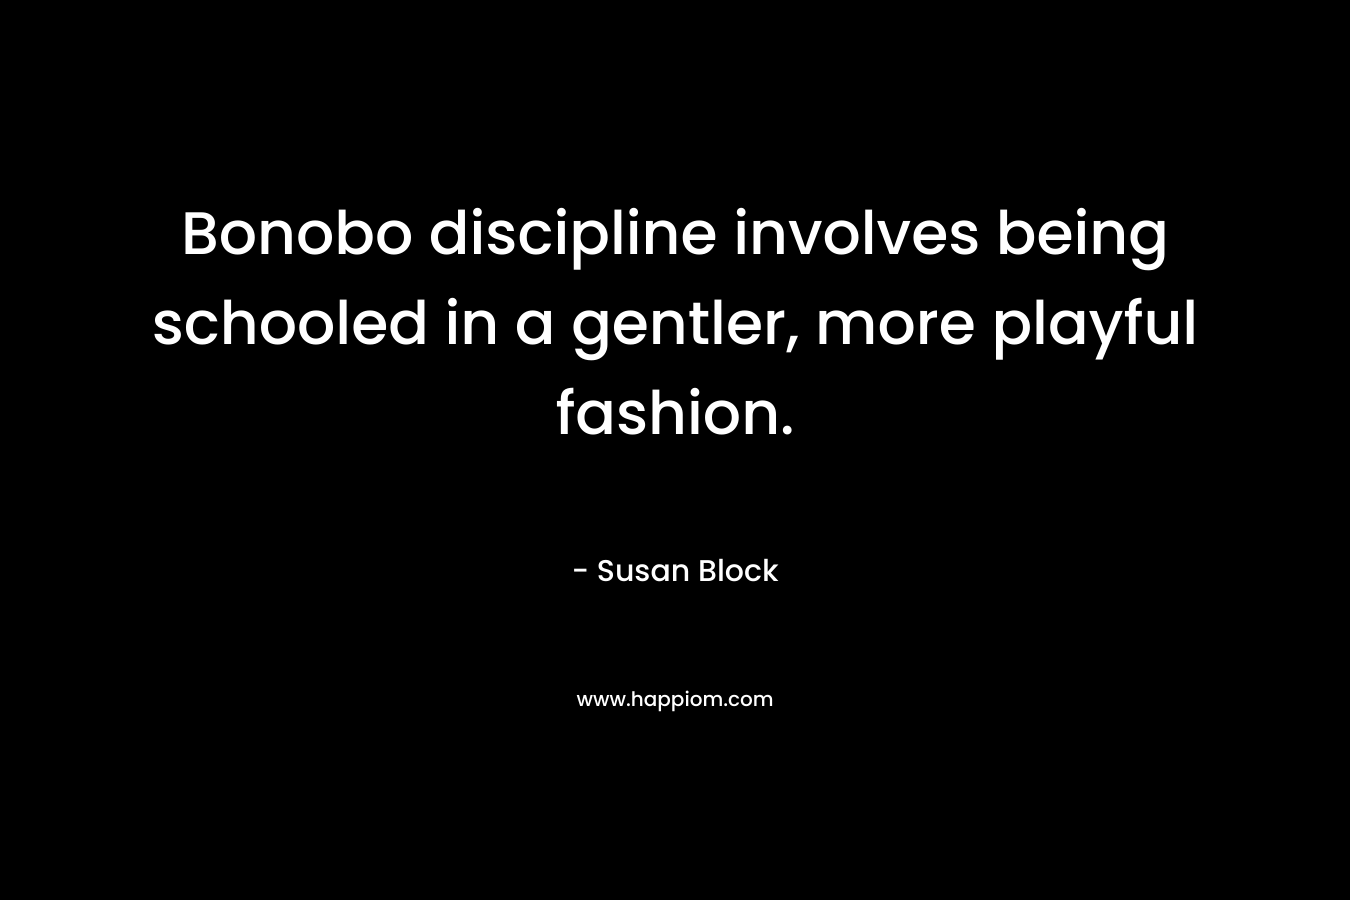 Bonobo discipline involves being schooled in a gentler, more playful fashion.